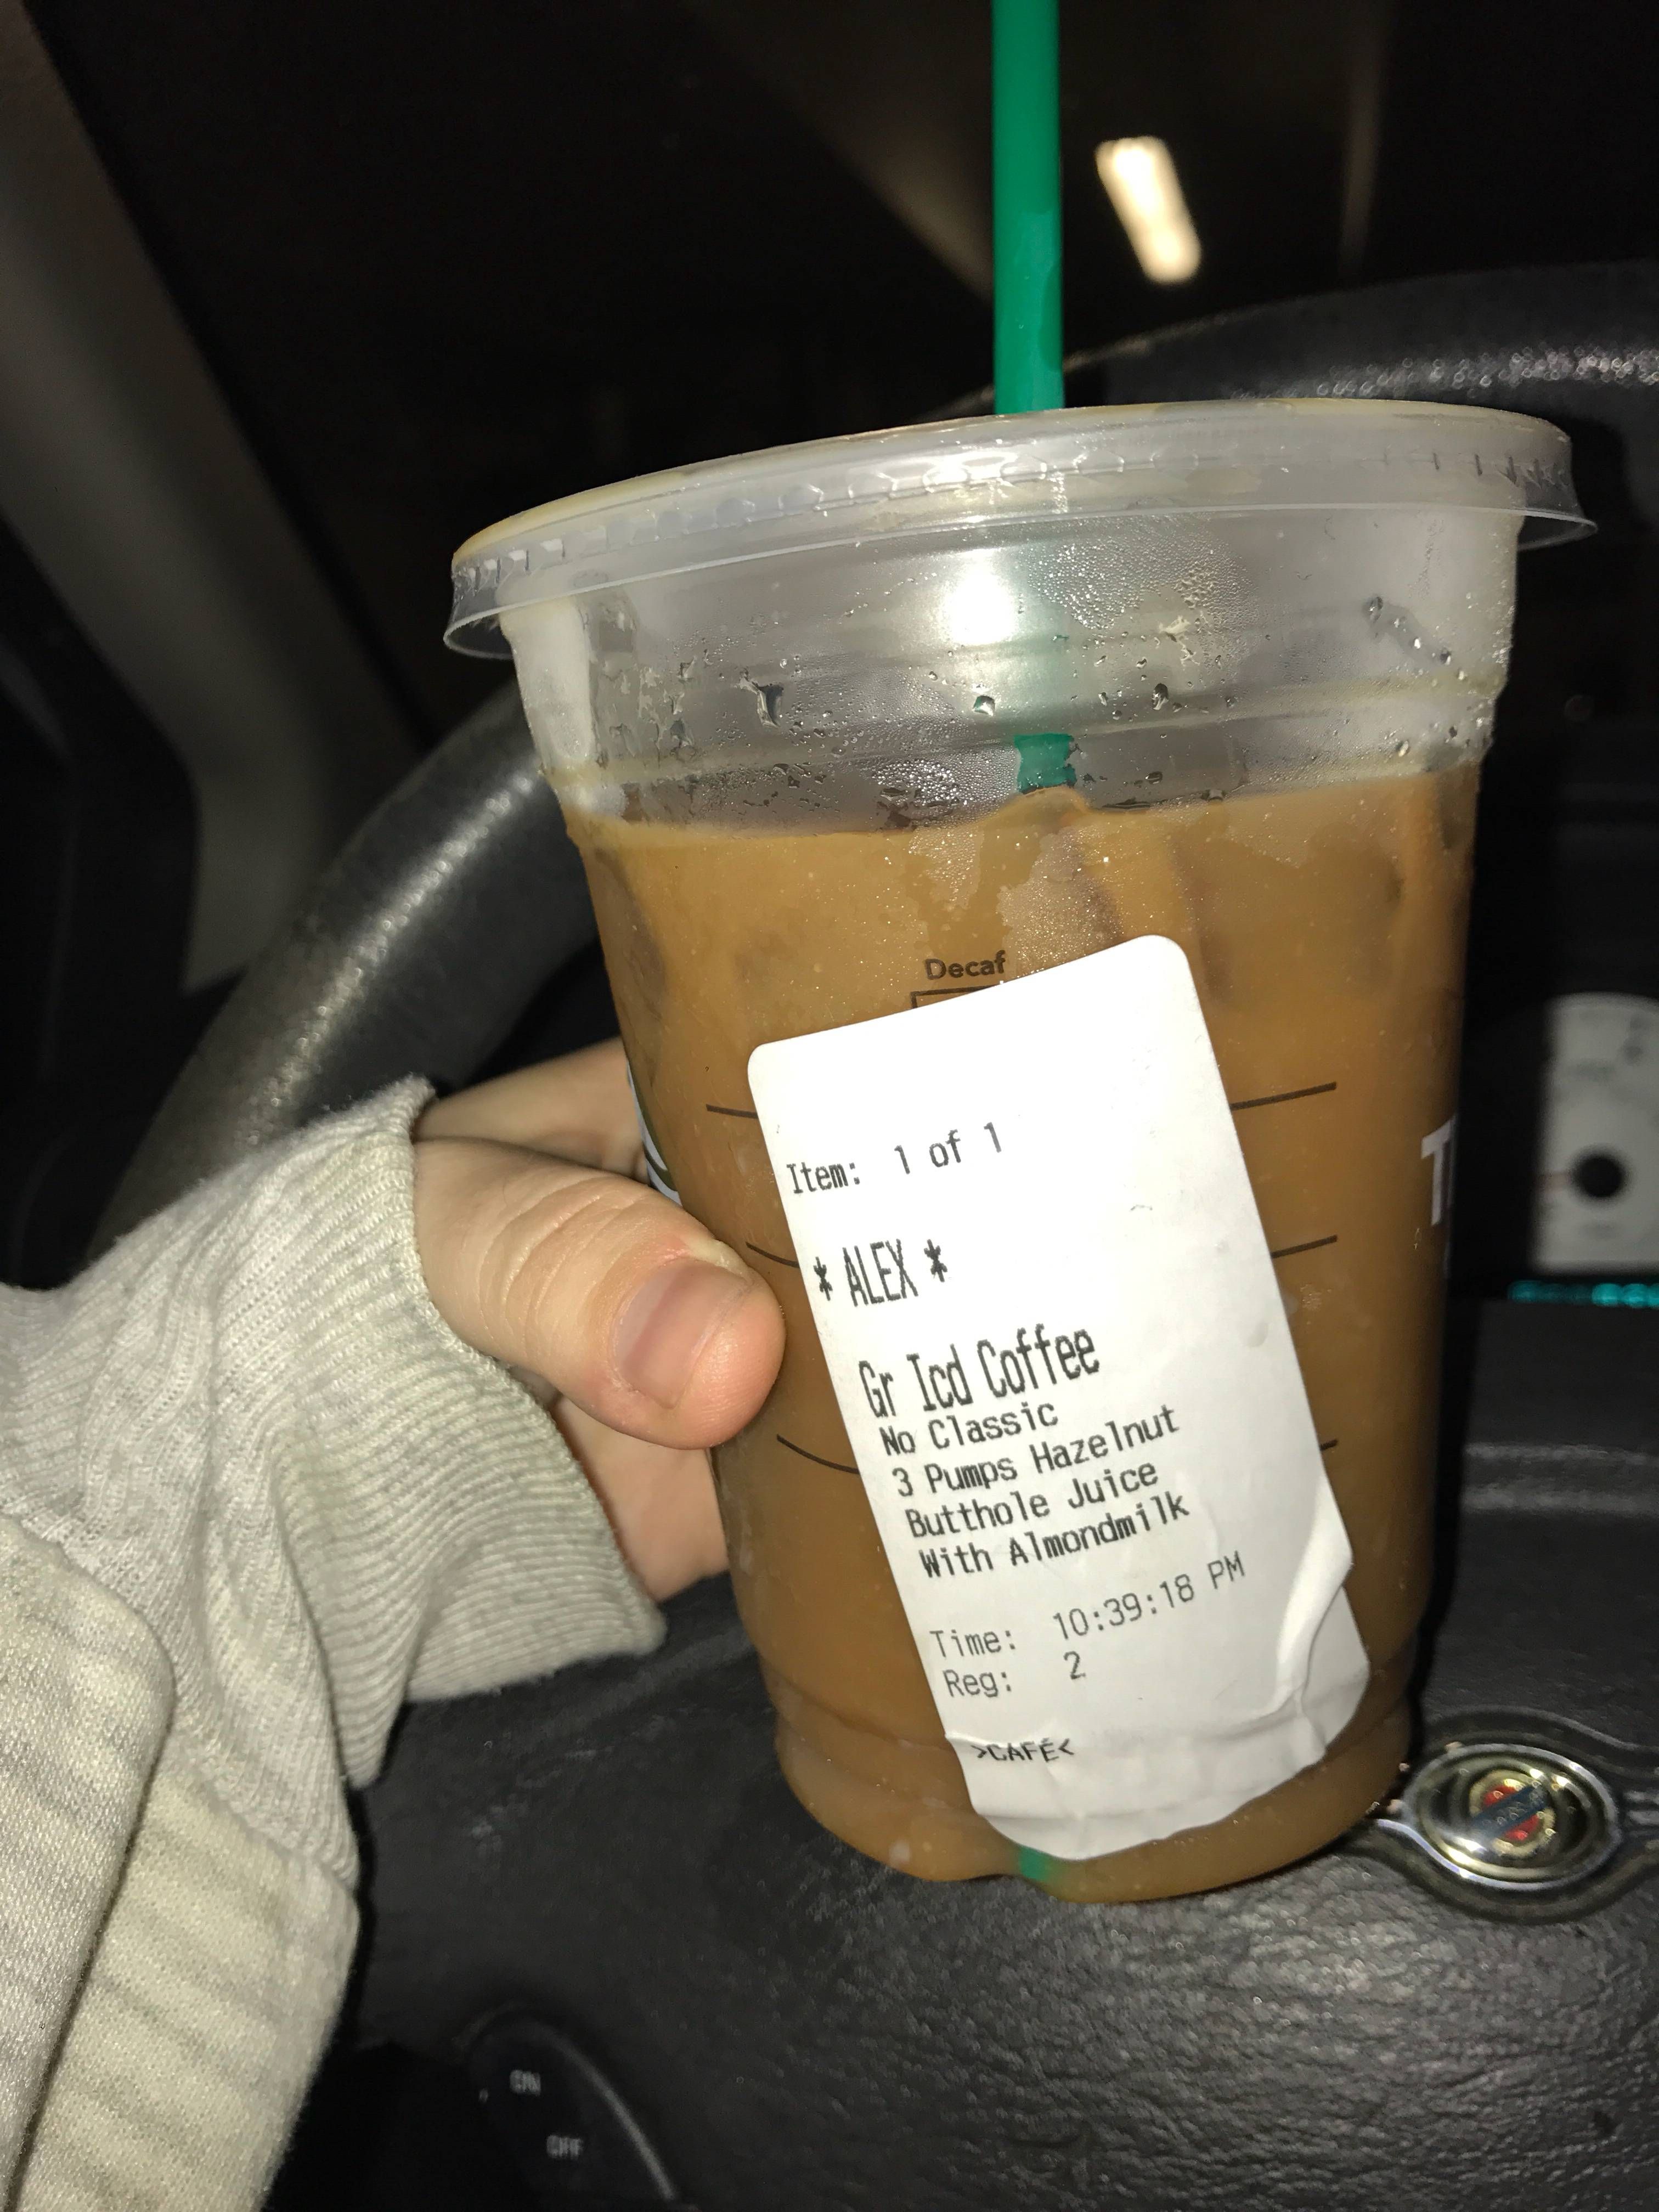 Starbucks has a new secret ingredient?